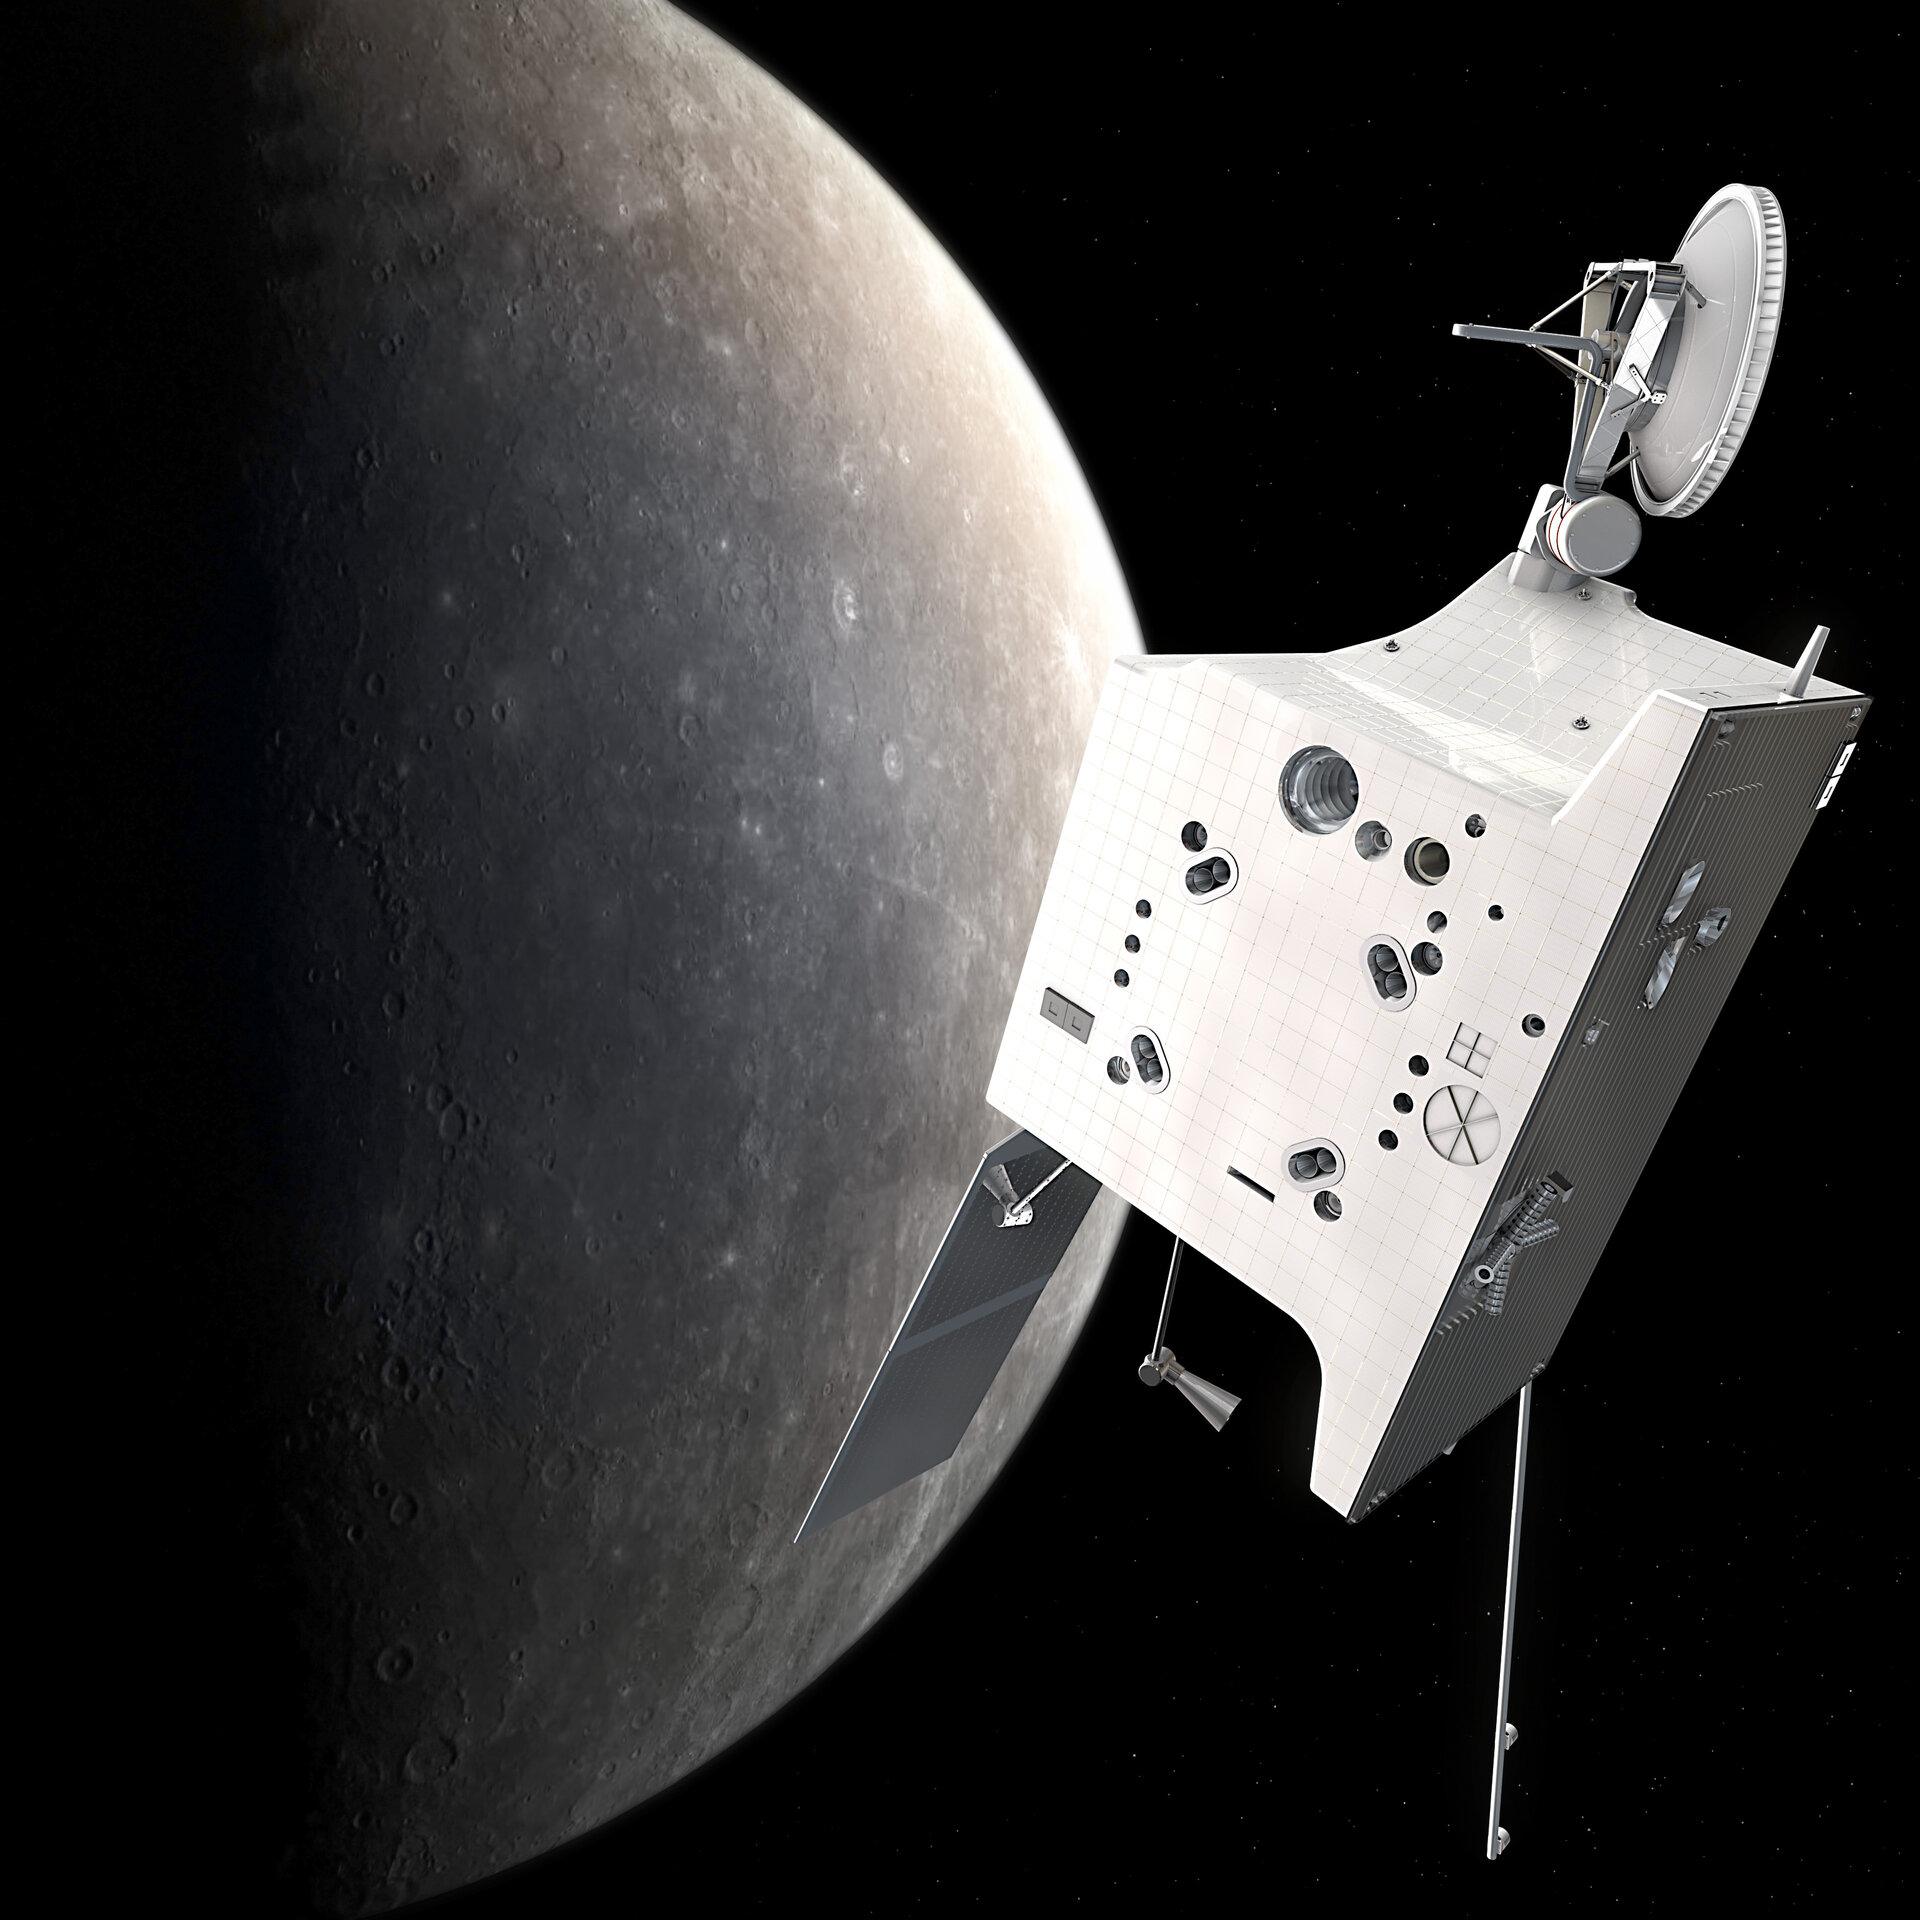 BepiColombo’s Mercury Planetary Orbiter